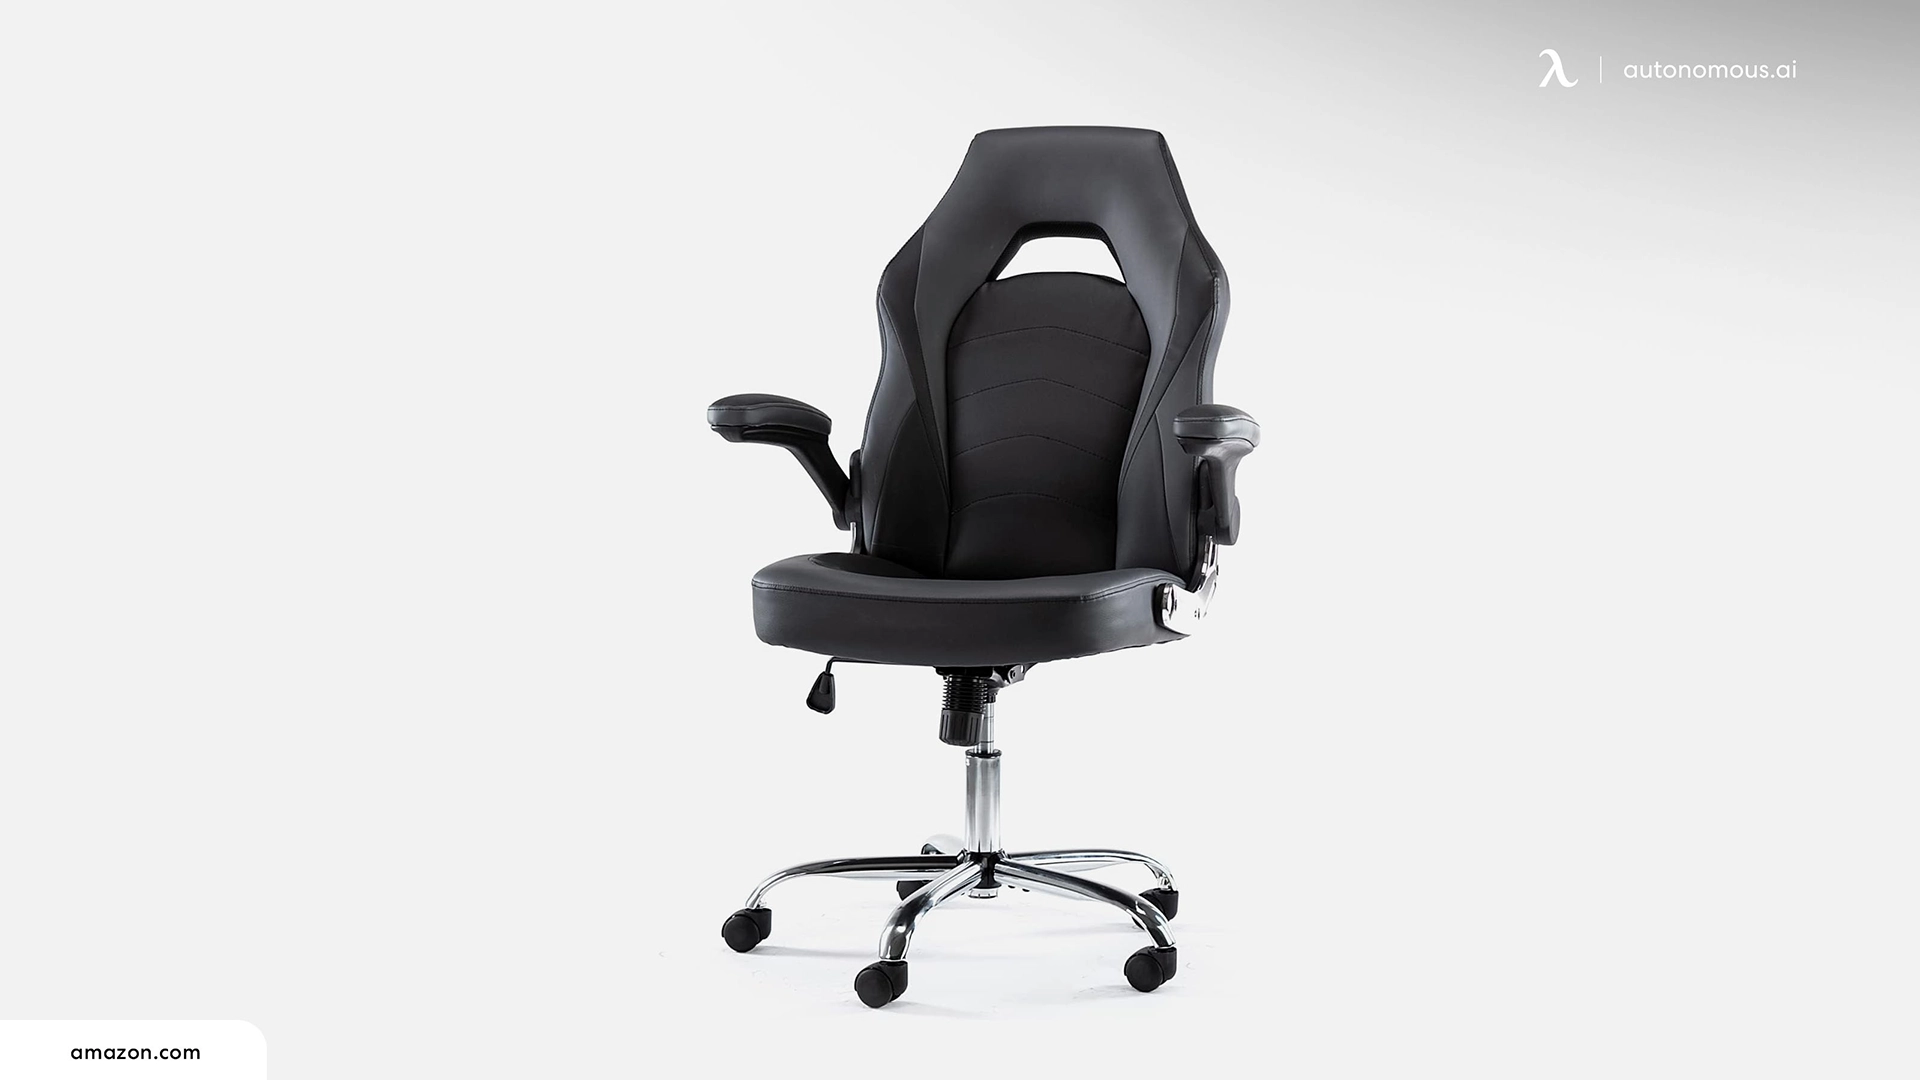 MCQ Ergonomic Computer Gaming Chair